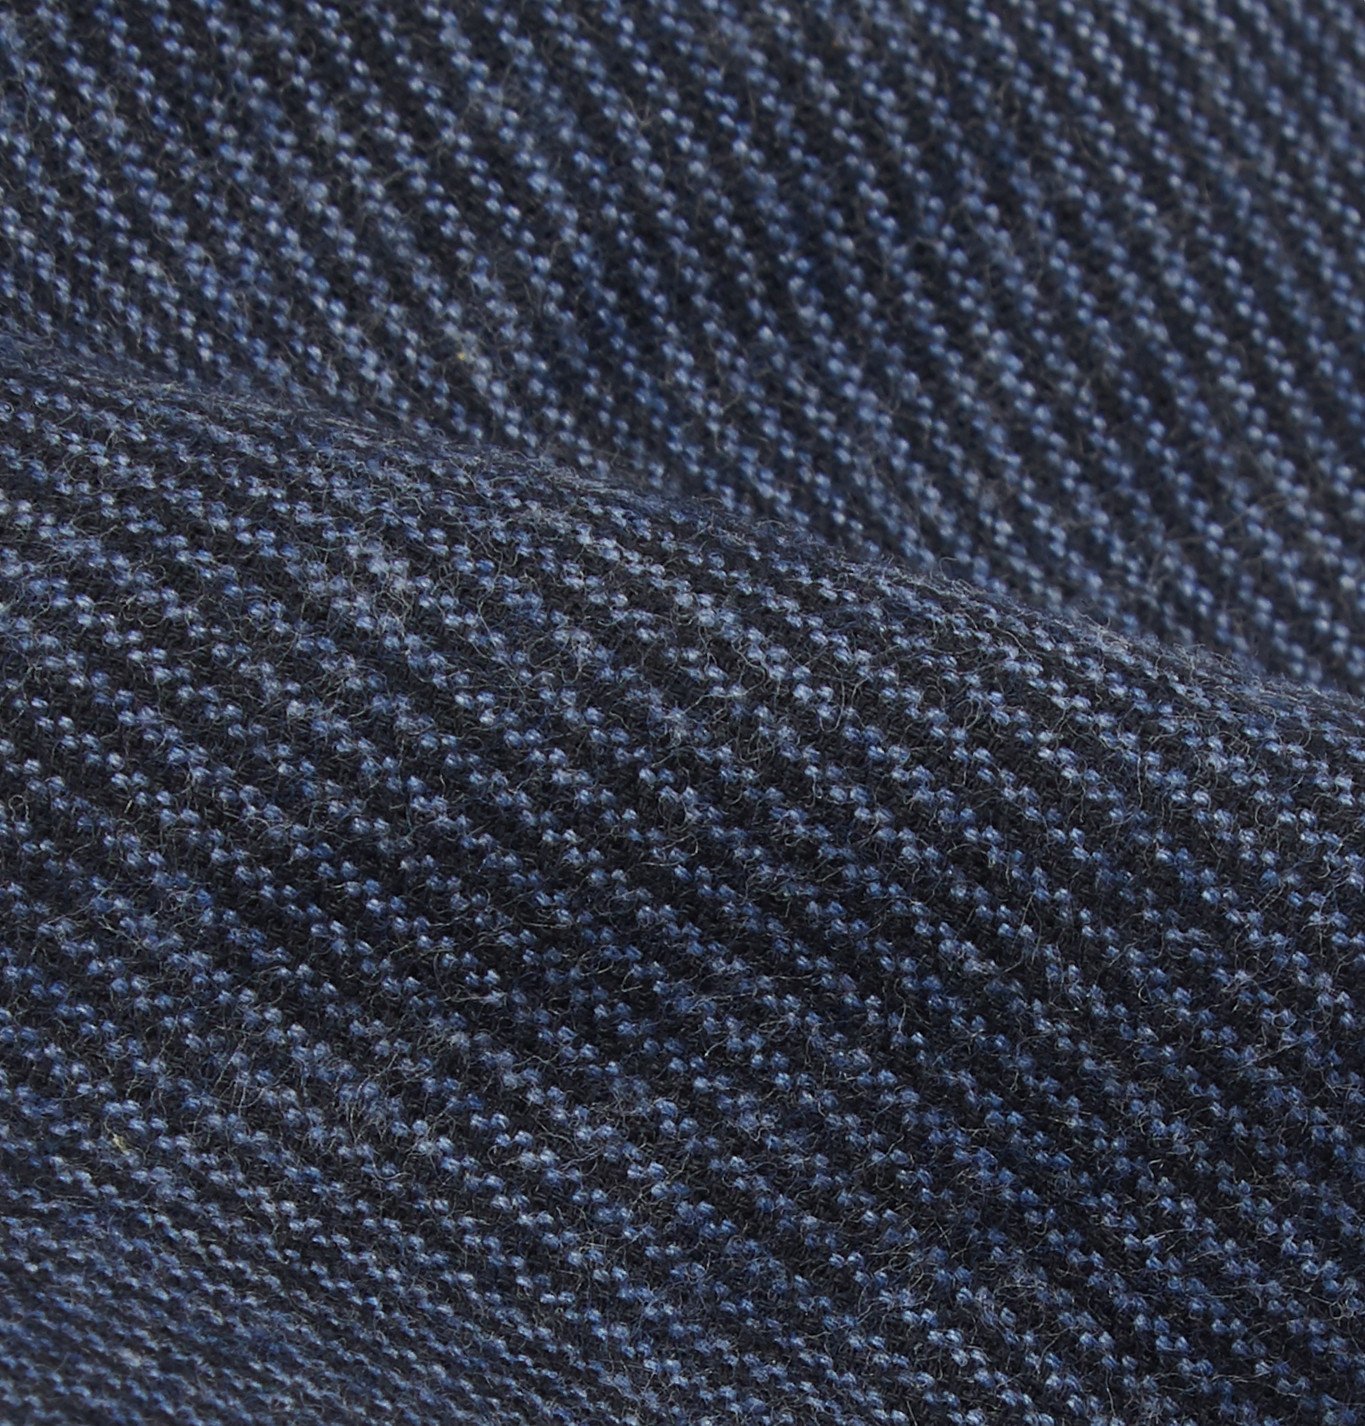 Oliver Spencer - 8cm Striped Cotton Tie - Blue